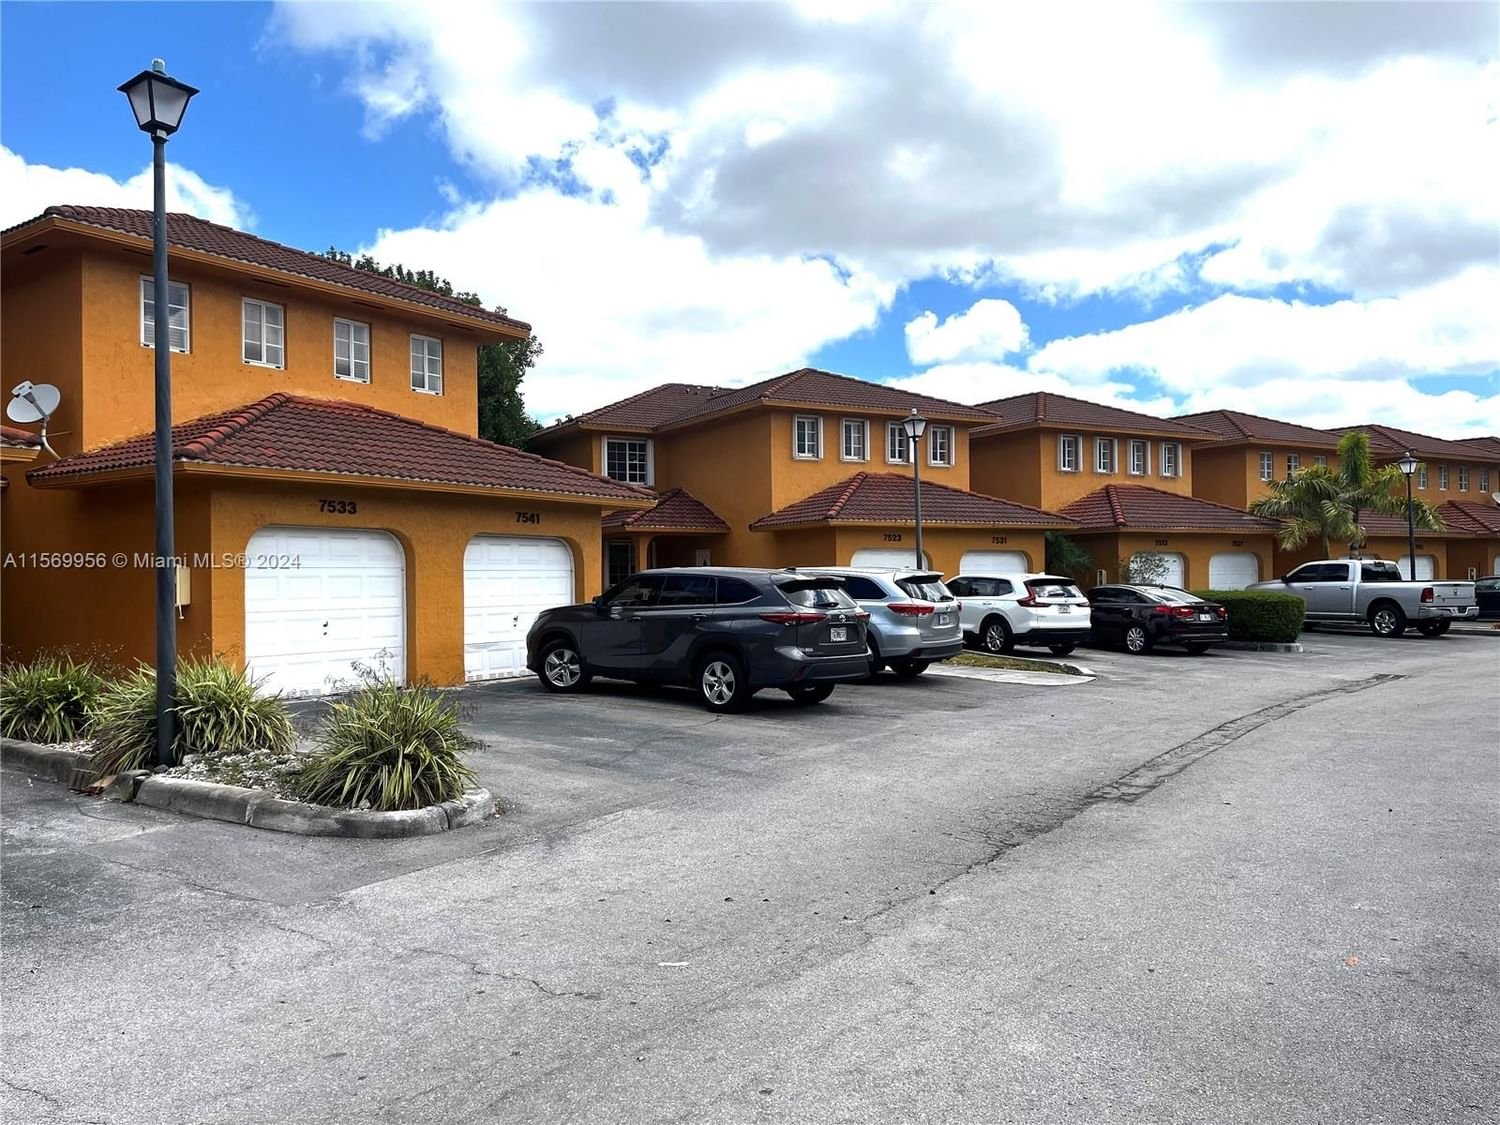 Real estate property located at 7533 176th Ter #7533, Miami-Dade County, LILANDIA ESTATES CONDO, Hialeah, FL